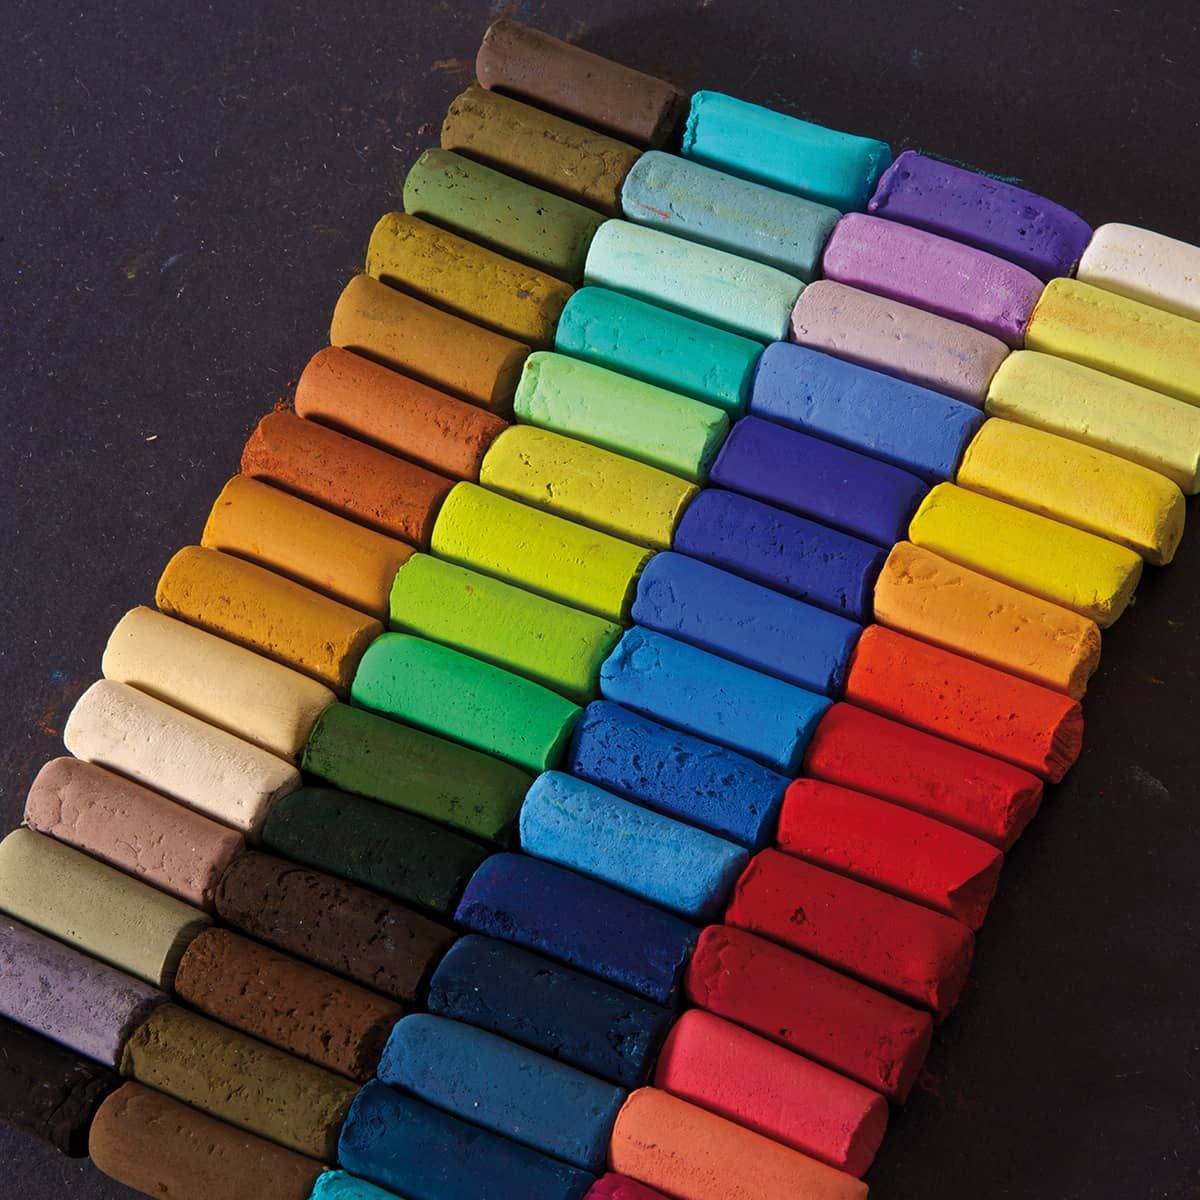 Sennelier Soft Pastel Set Half Stick, 40 Colors - Artist & Craftsman Supply